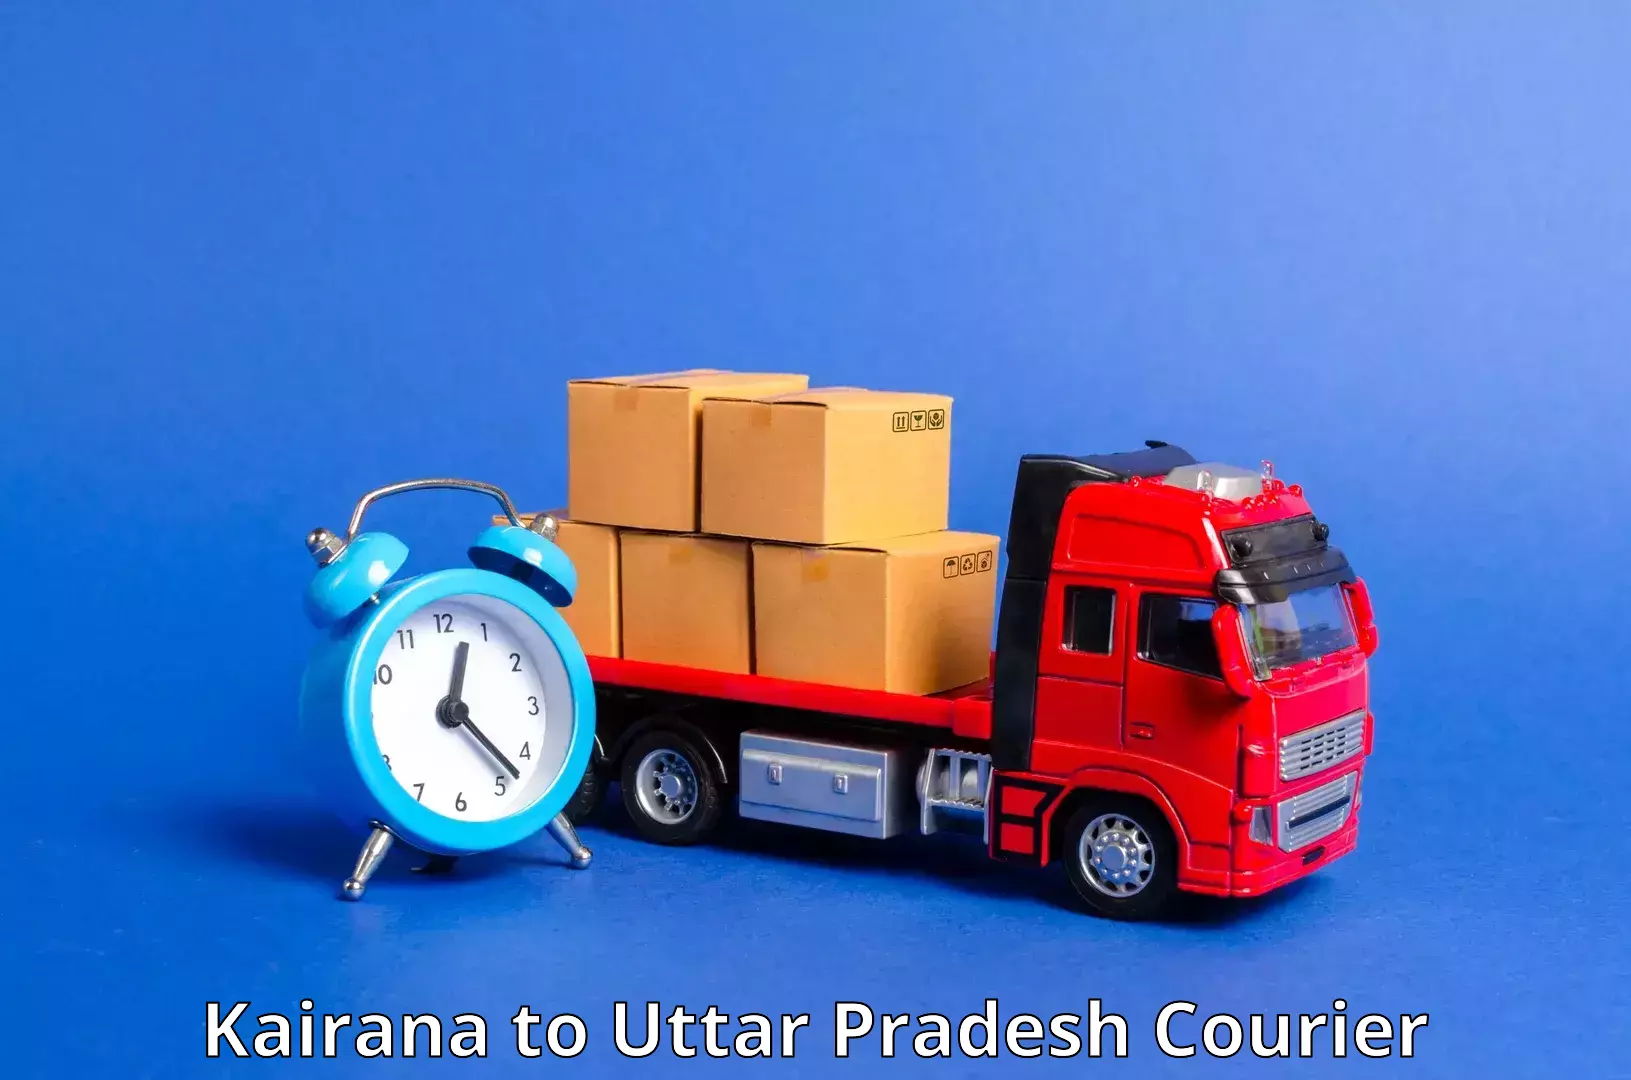 Premium courier services in Kairana to Mathura